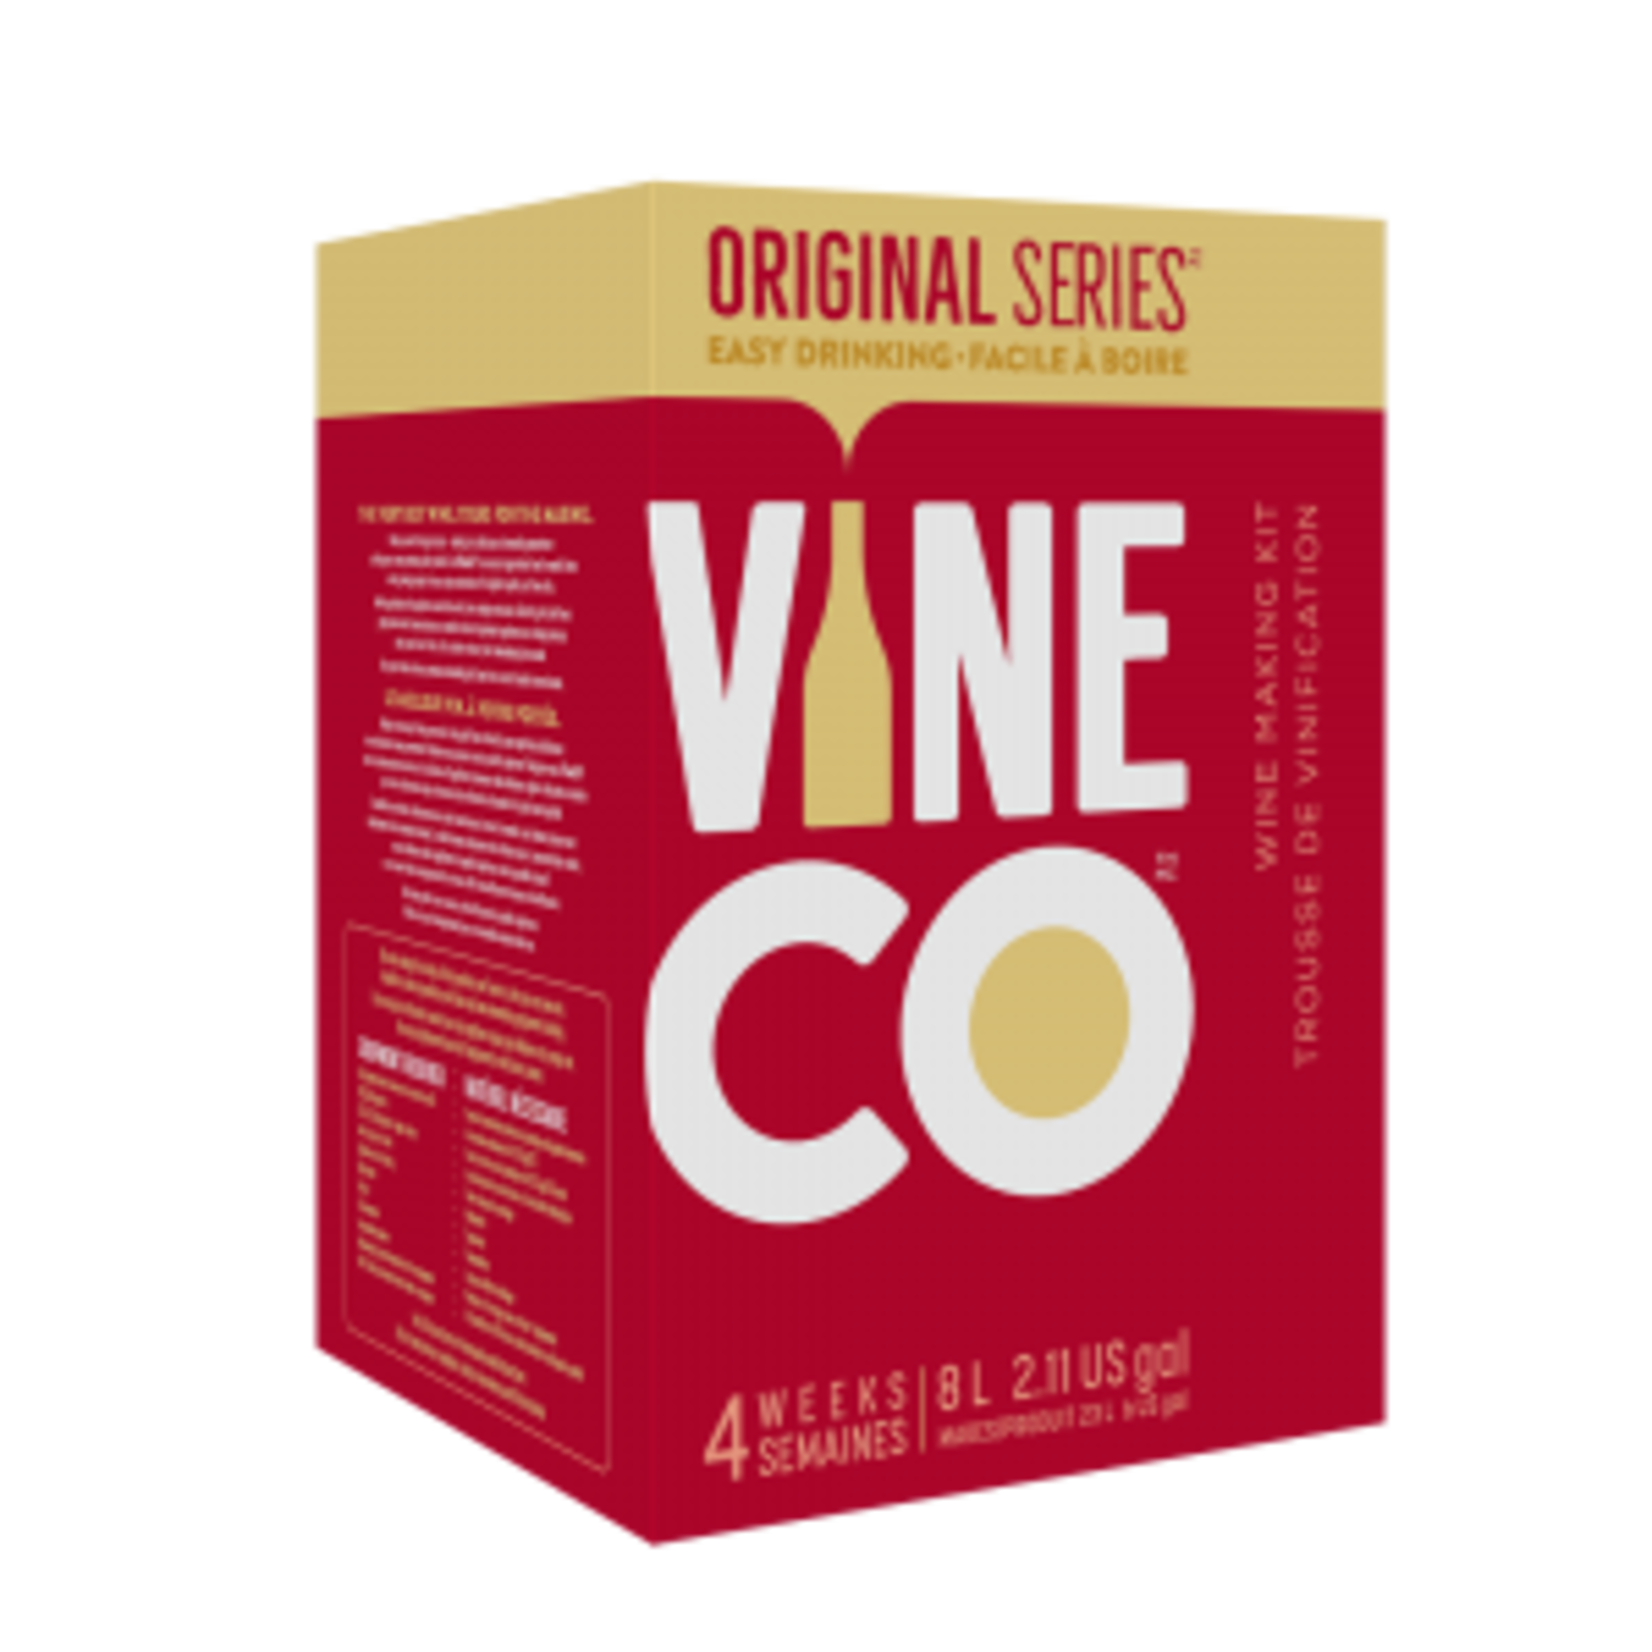 Vine Co. Original Series Gewurztraminer (Wine Kit), California